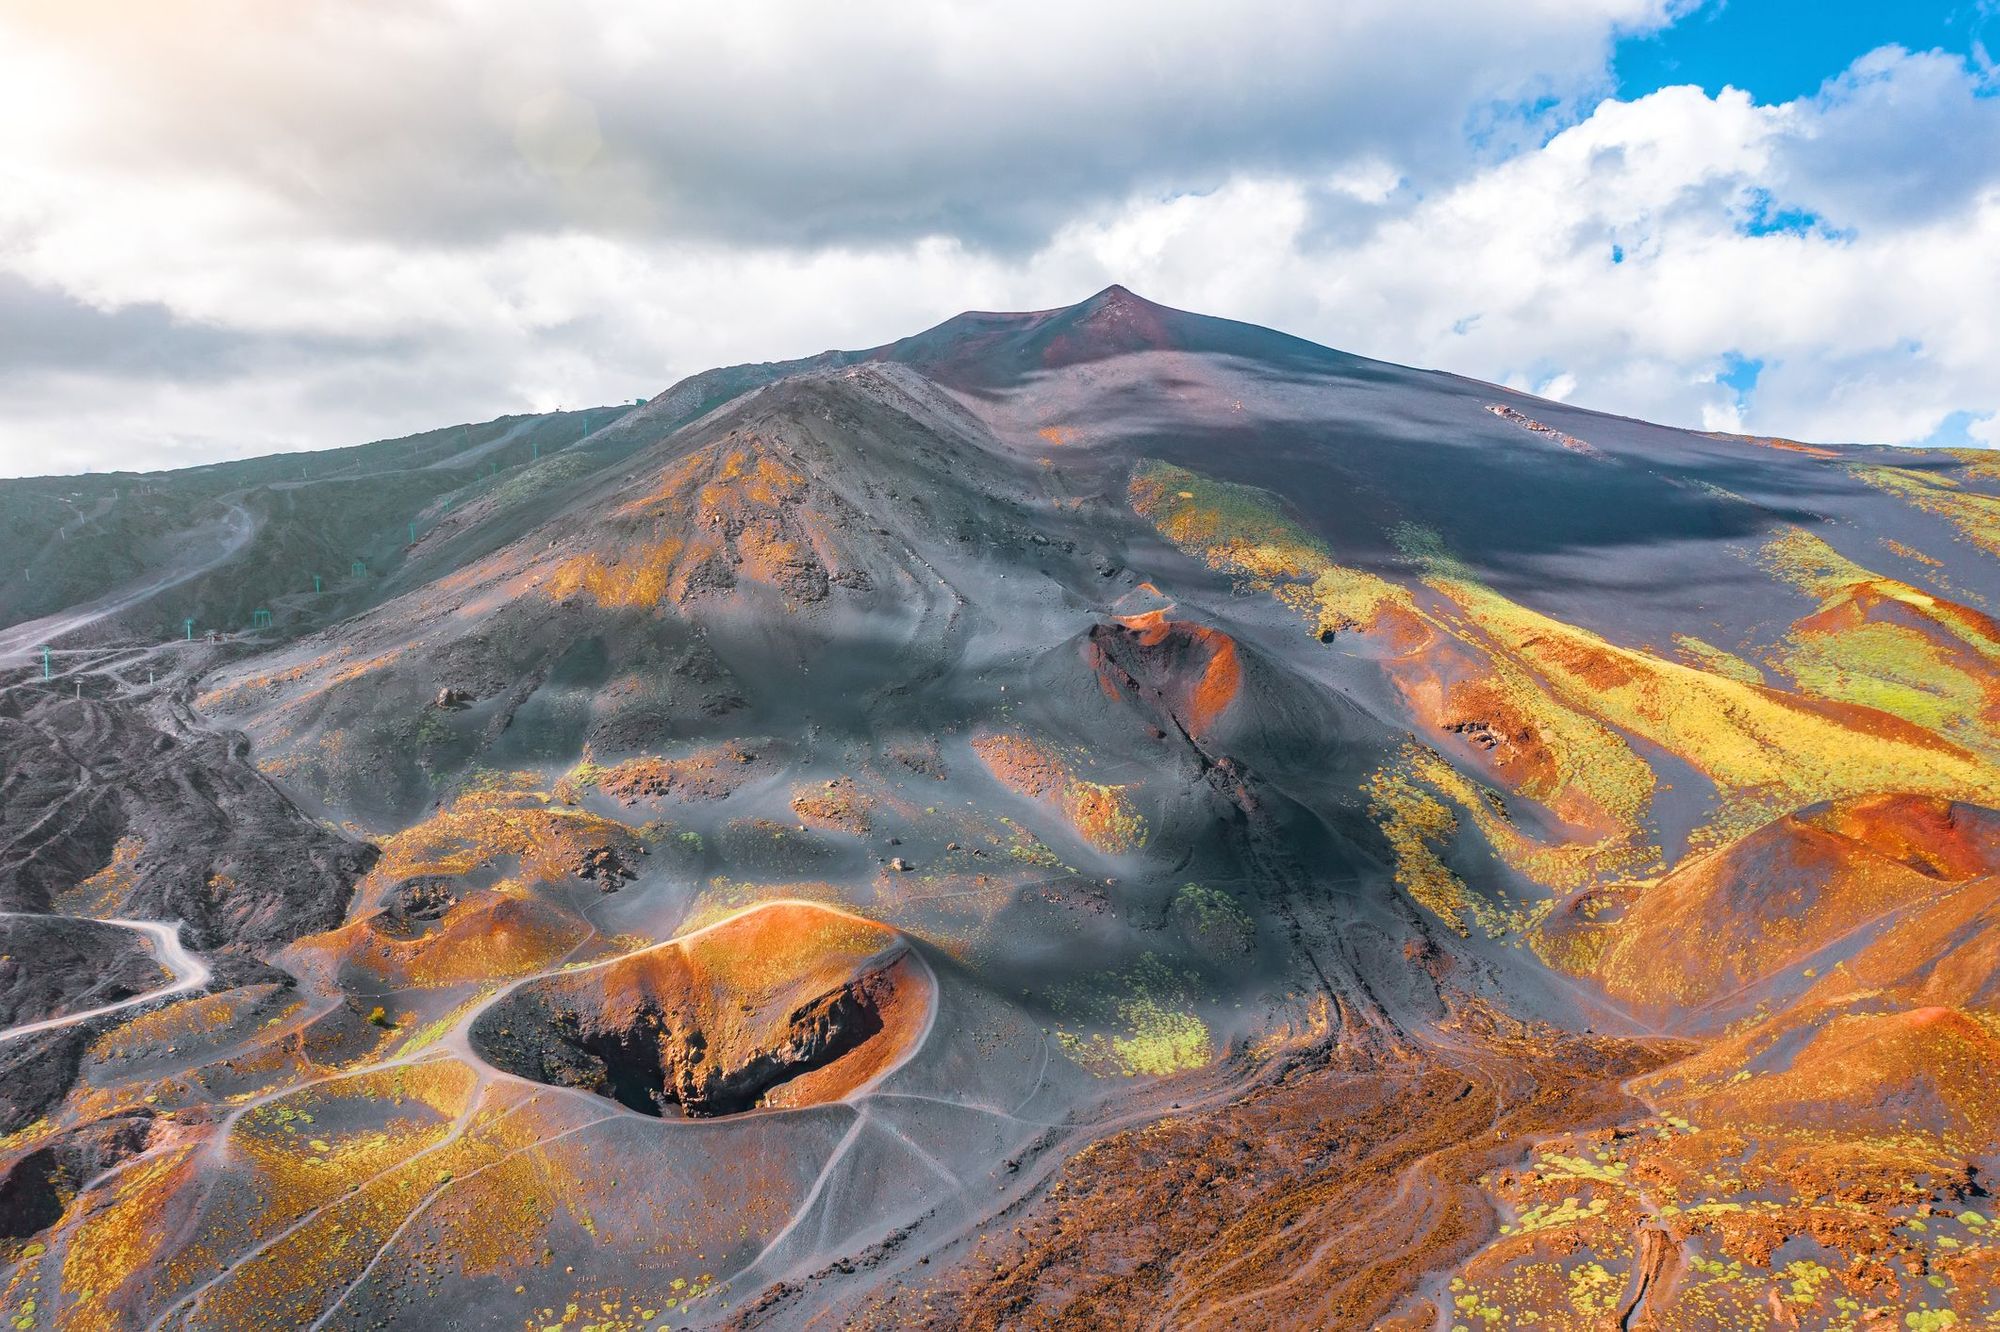 The charred black and orange slopes of Mount Etna